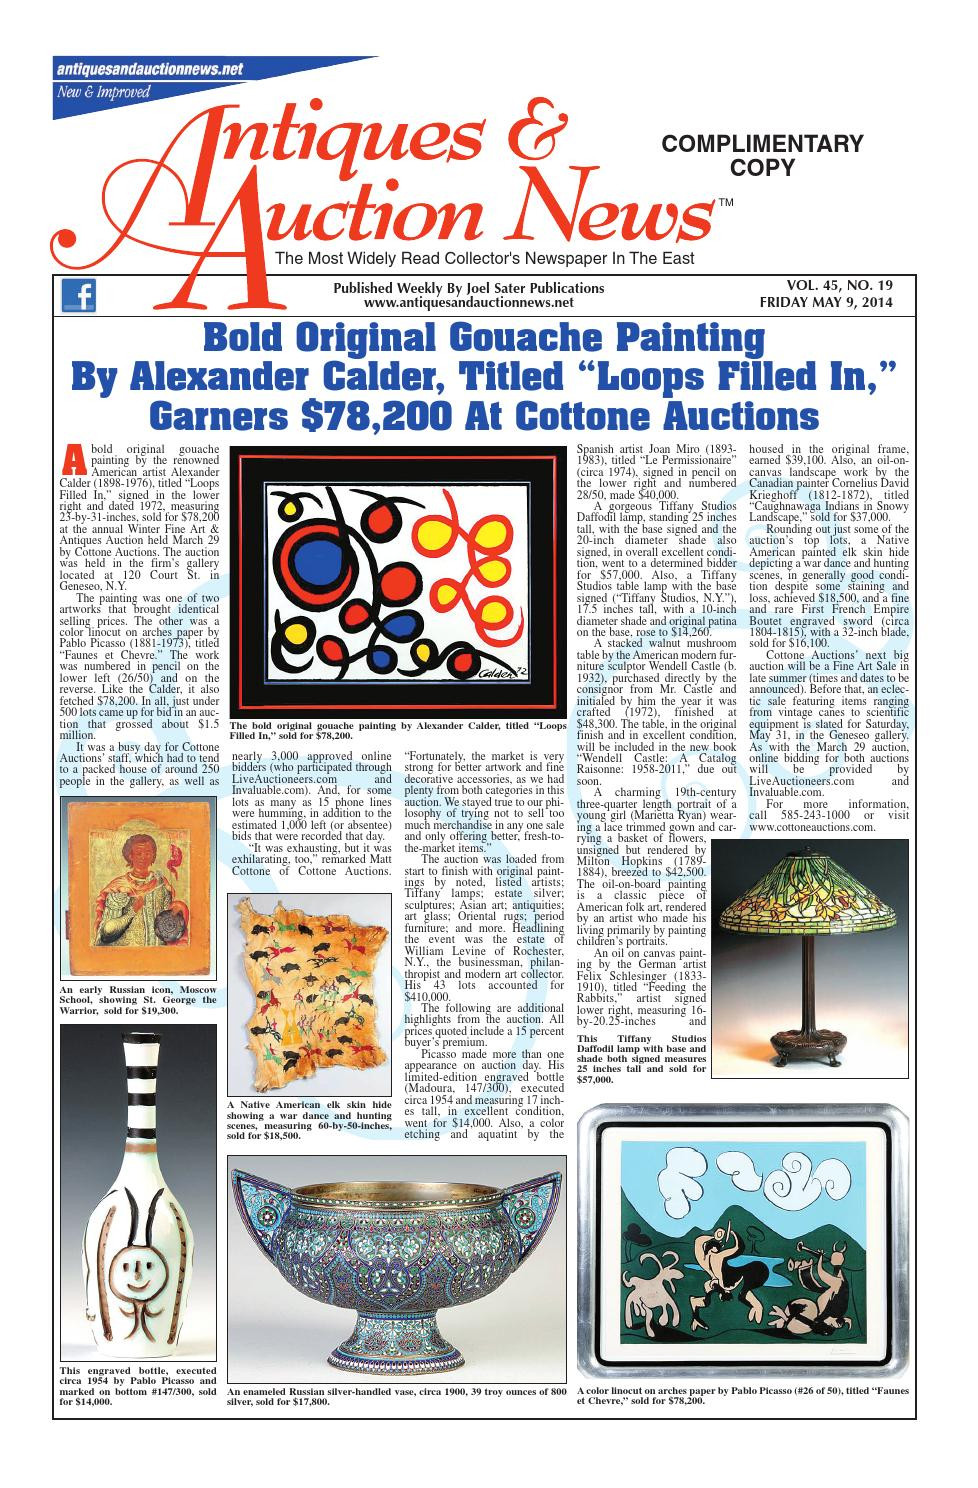 rose medallion vase of antiques auction news 050914 by antiques auction news issuu throughout page 1